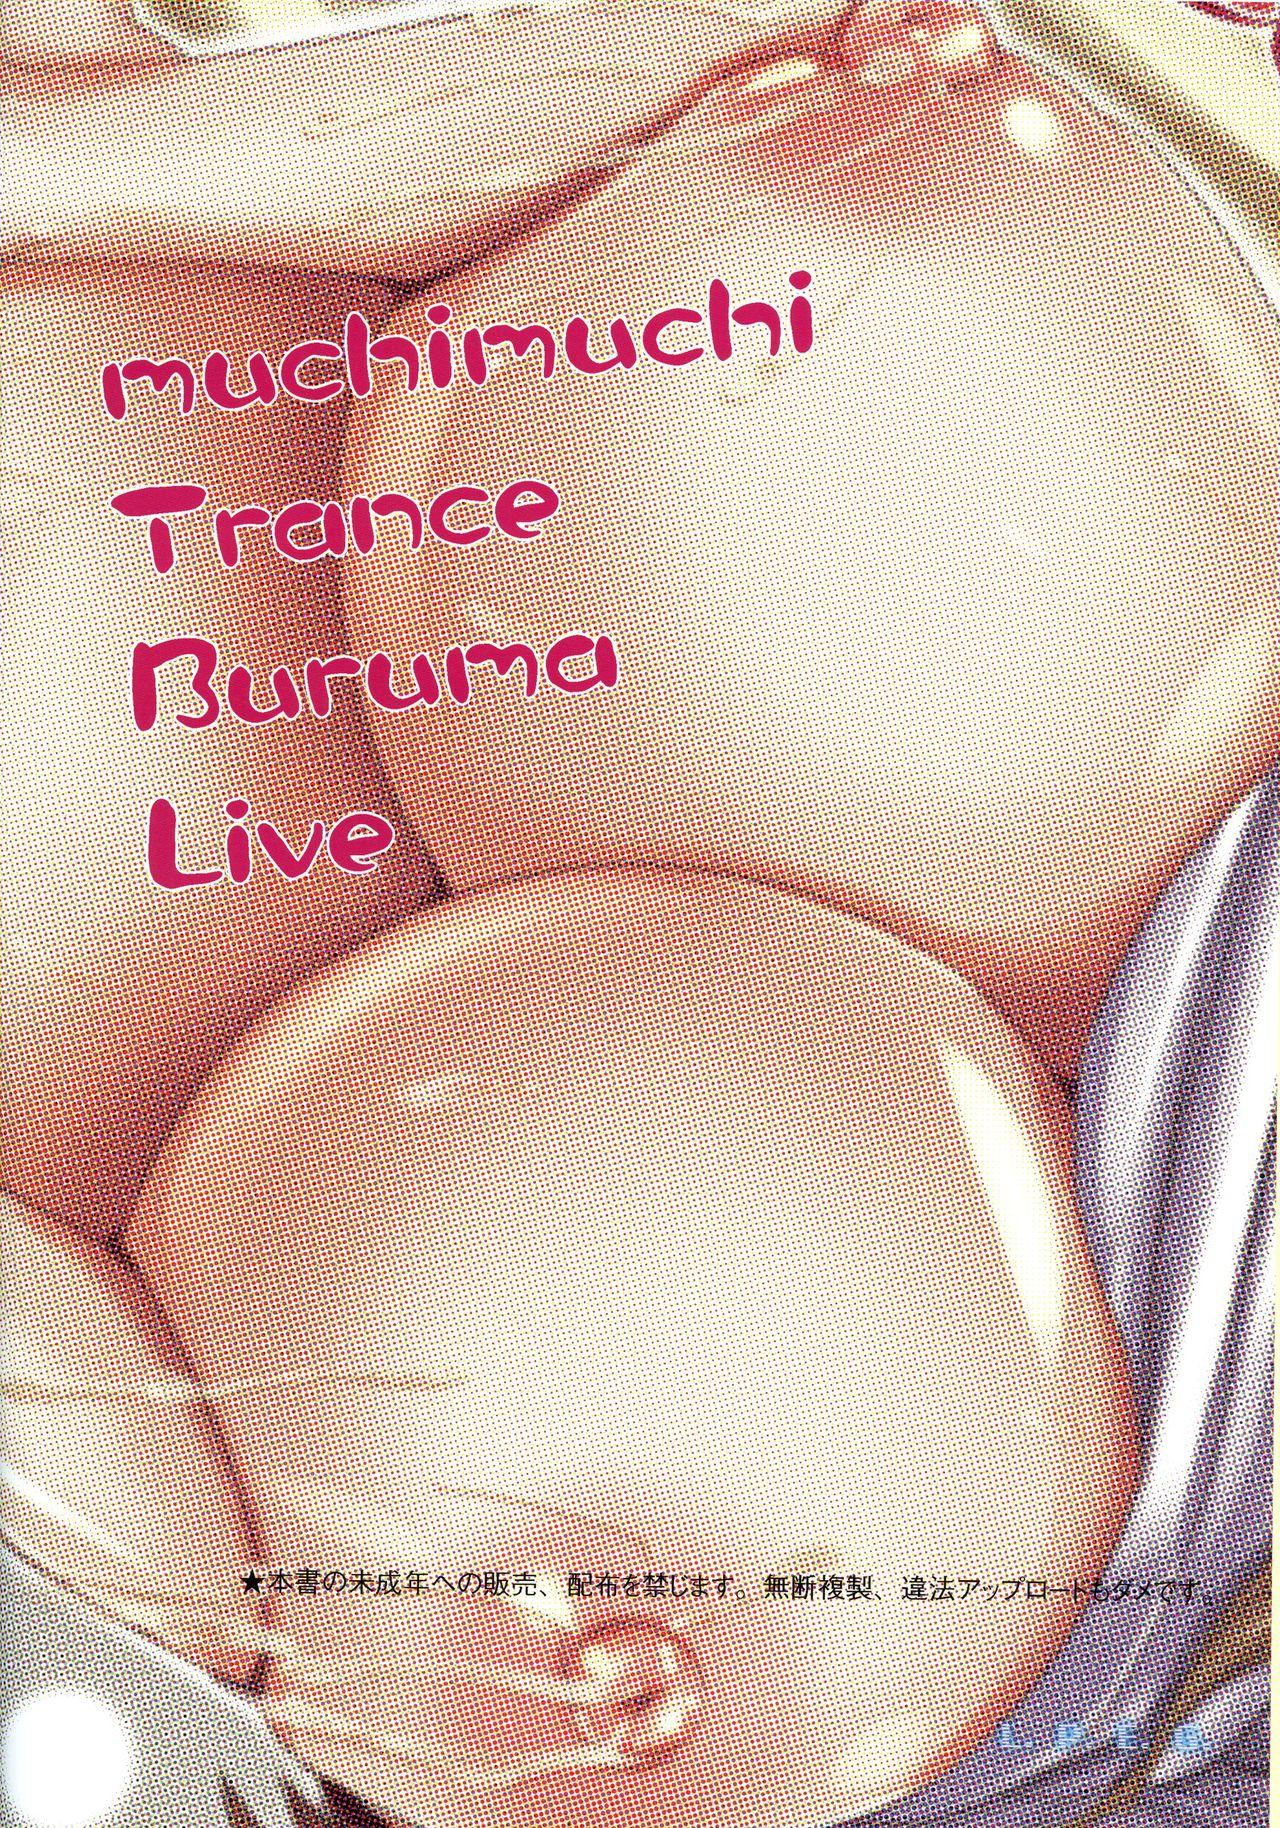 Nerd Muchimuchi Trans Bloomer Live - Original Rubbing - Picture 2